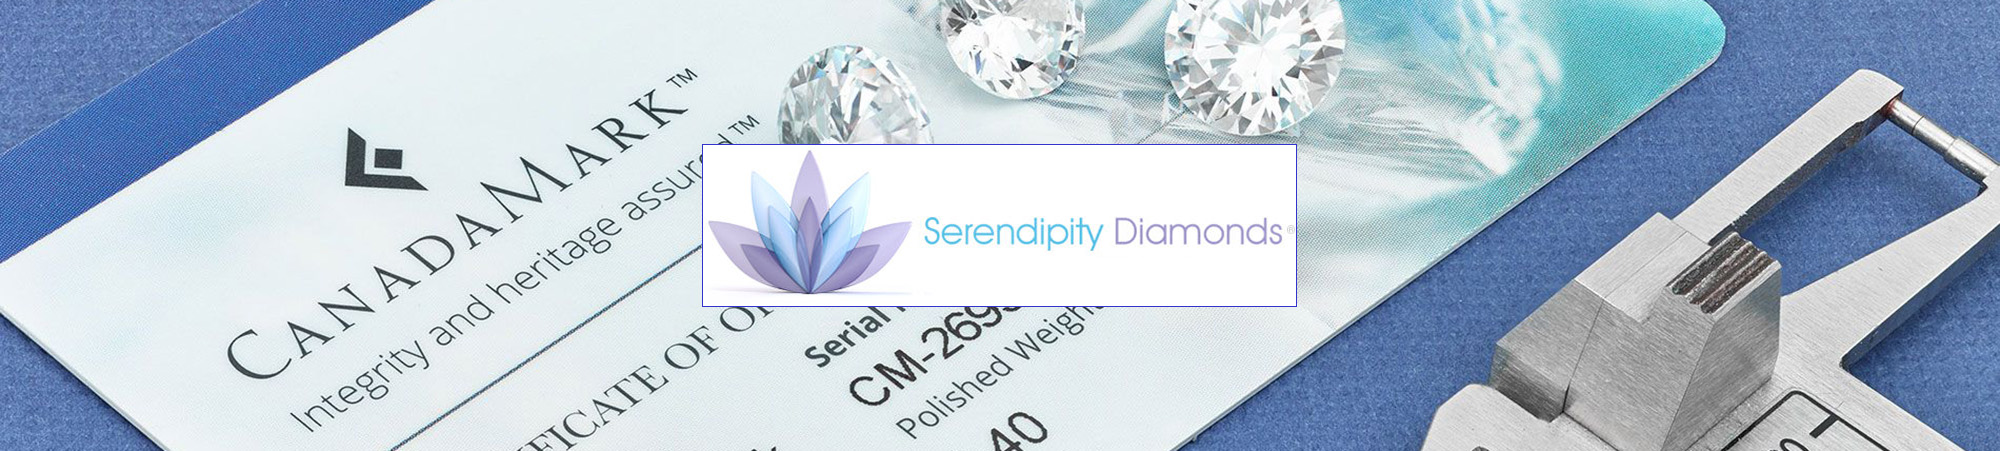 Serendipty Diamonds banner image